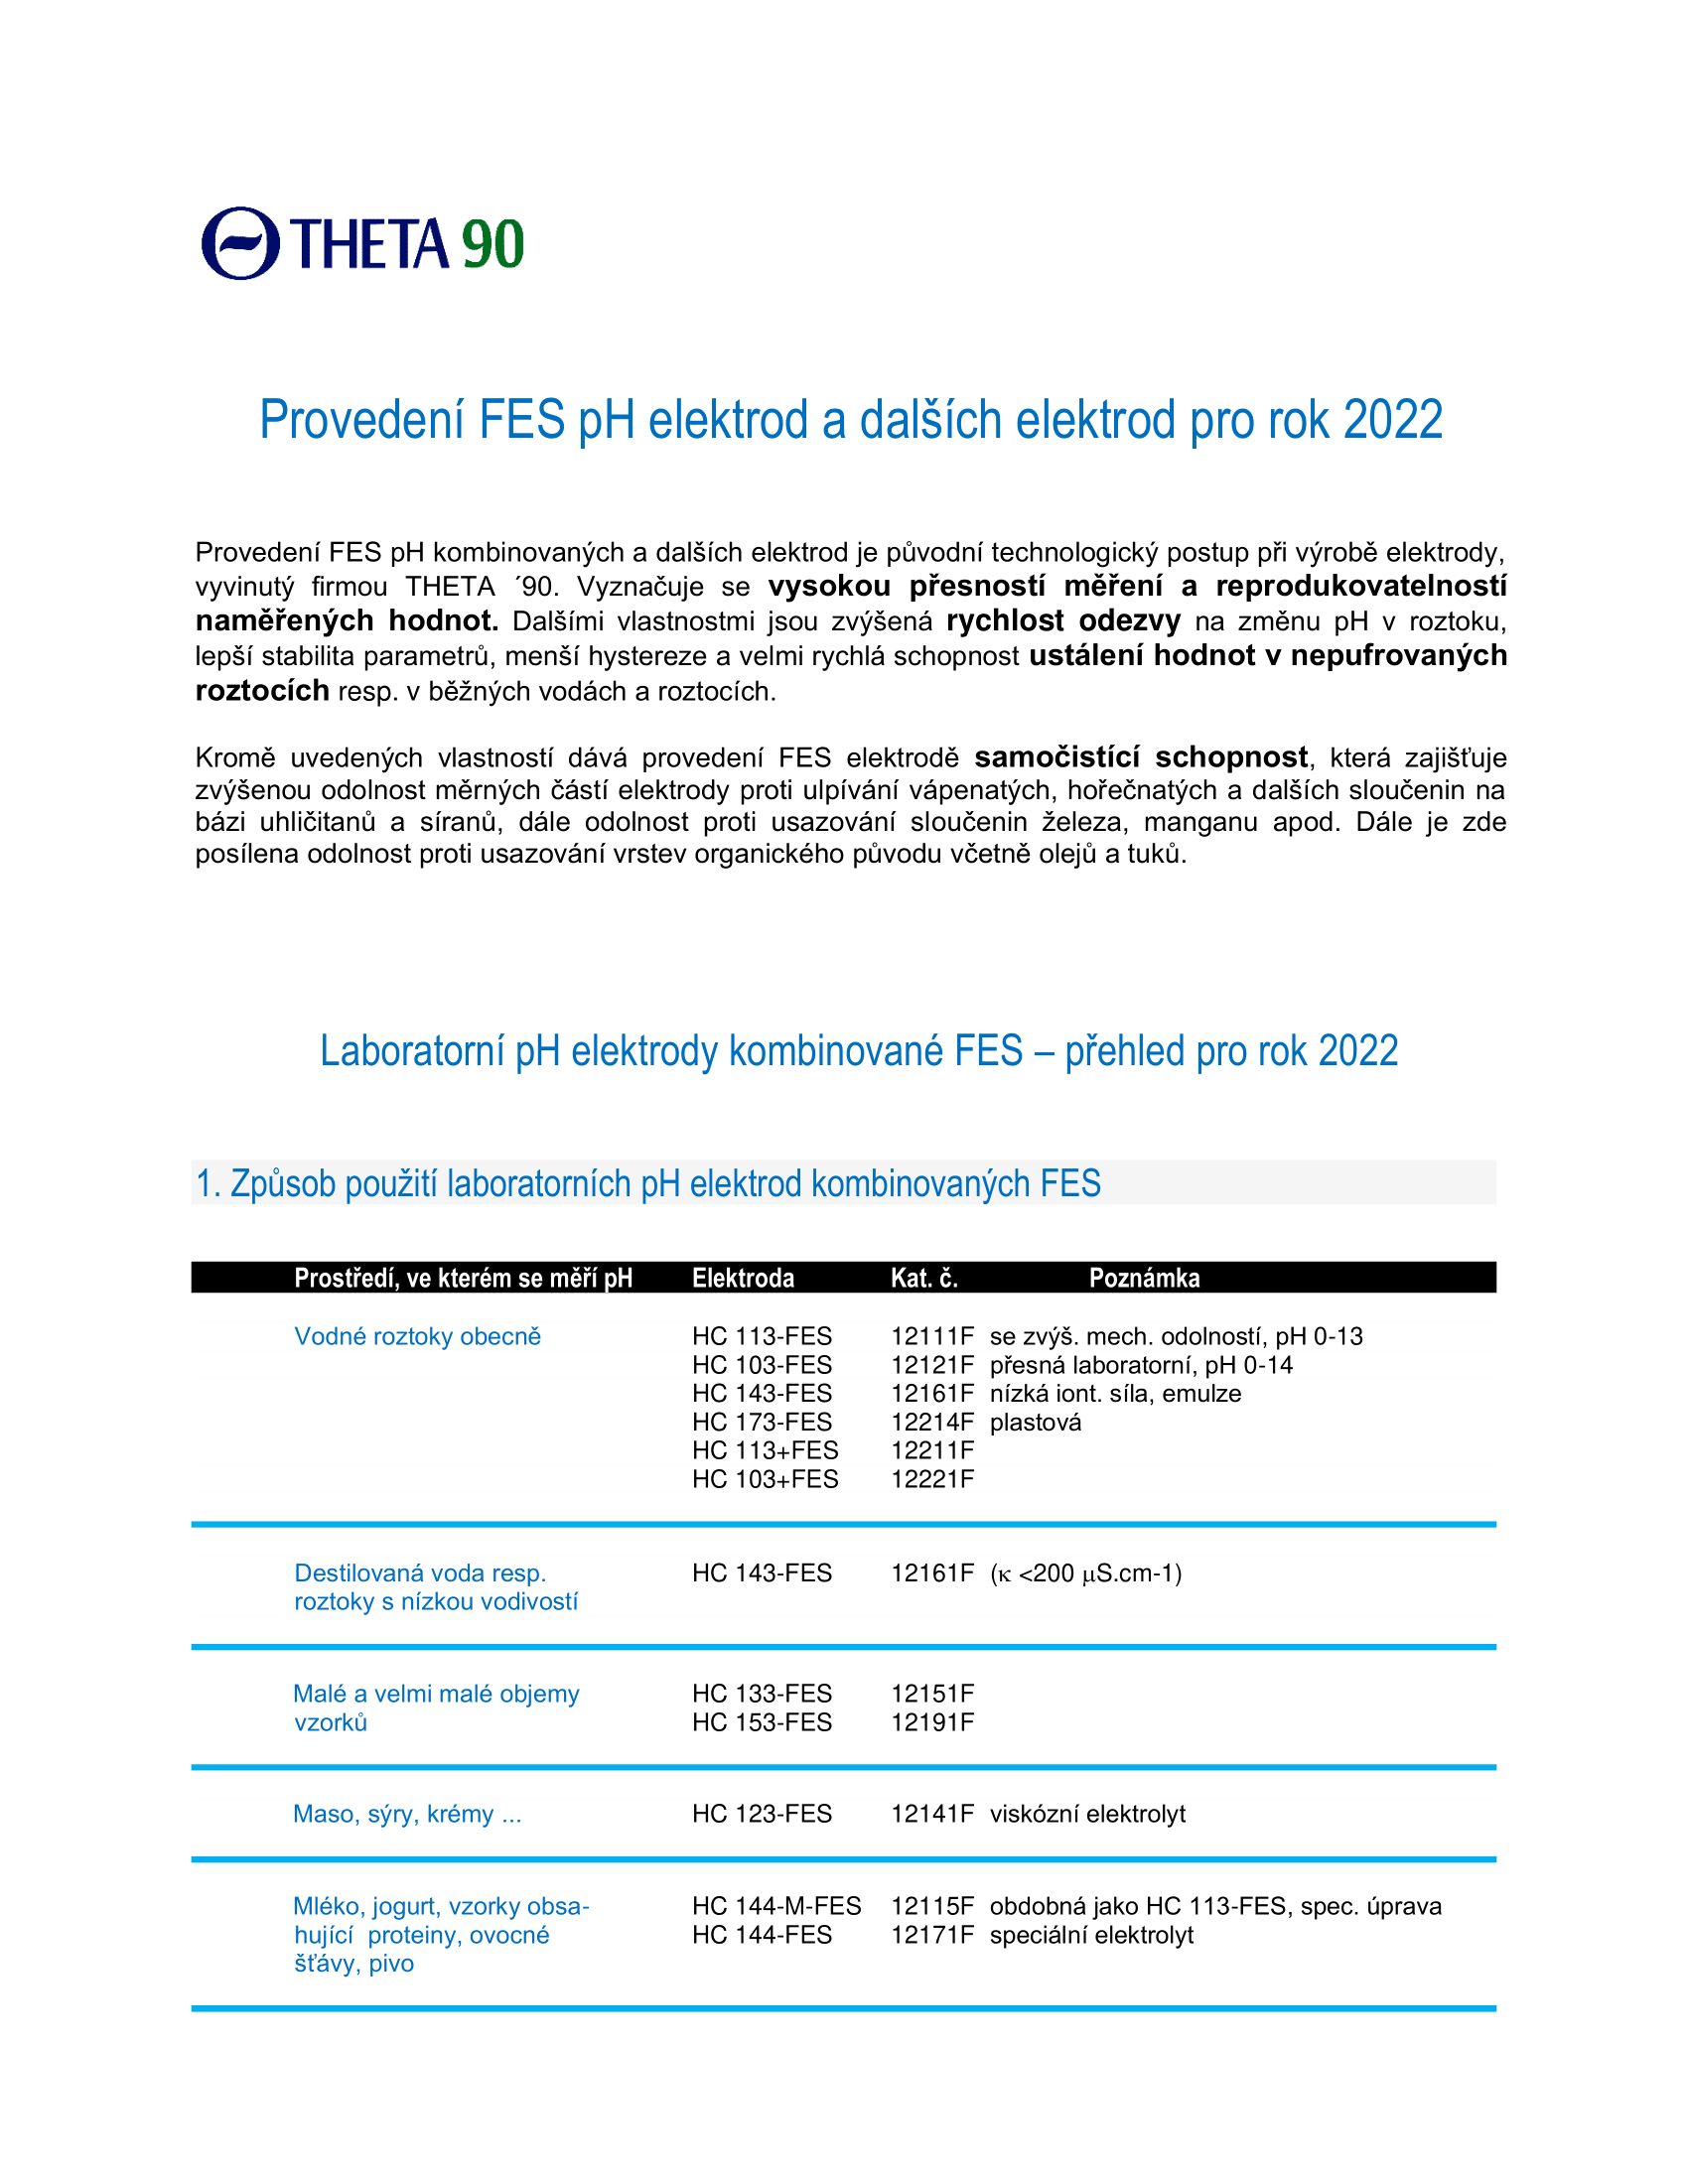 ph-elektrody-laboratorni-fes-2022-1.png